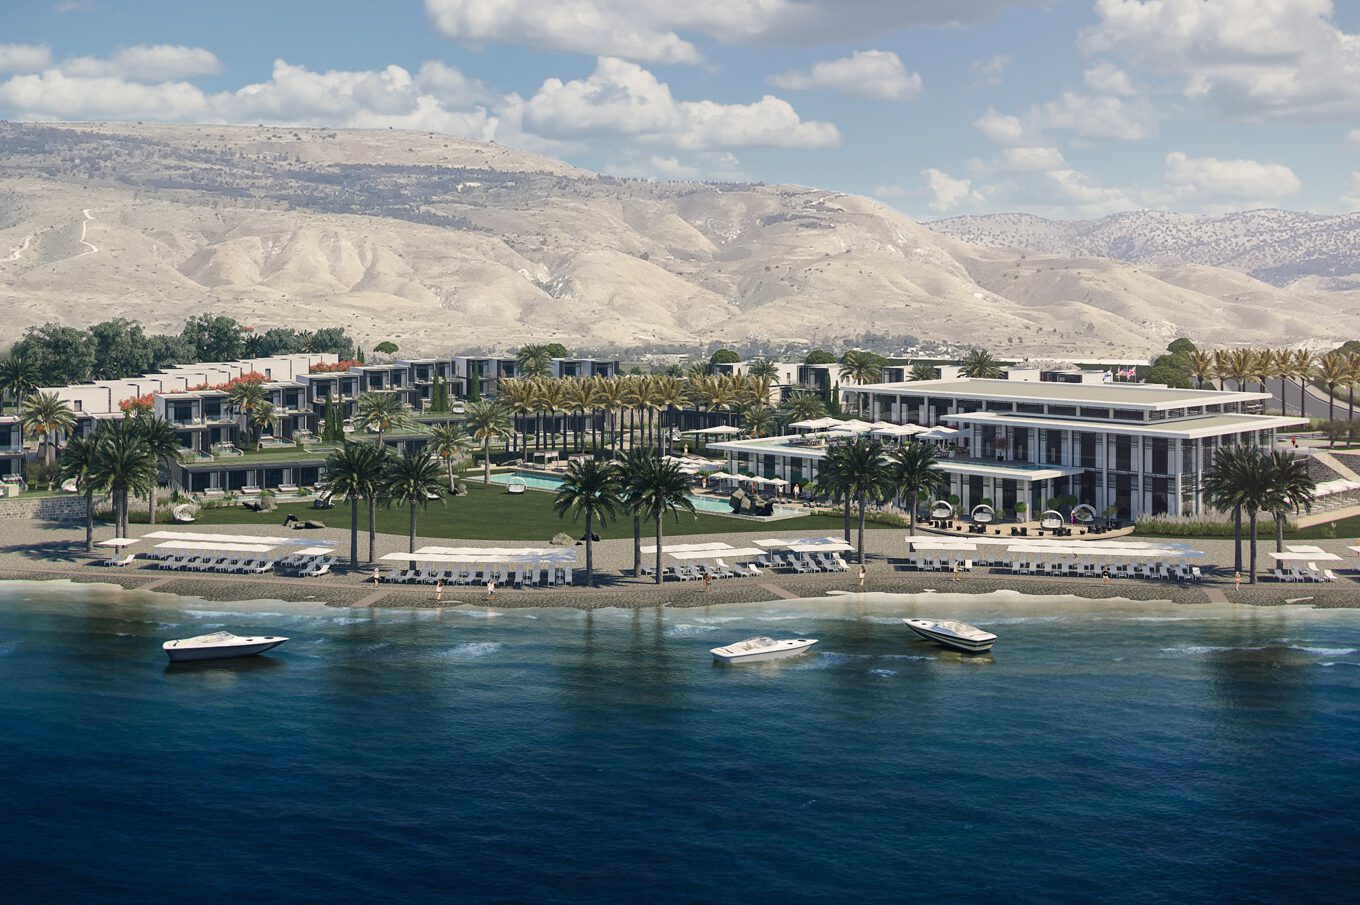 EIN GEV RESORT HOTEL SEA OF GALILEE